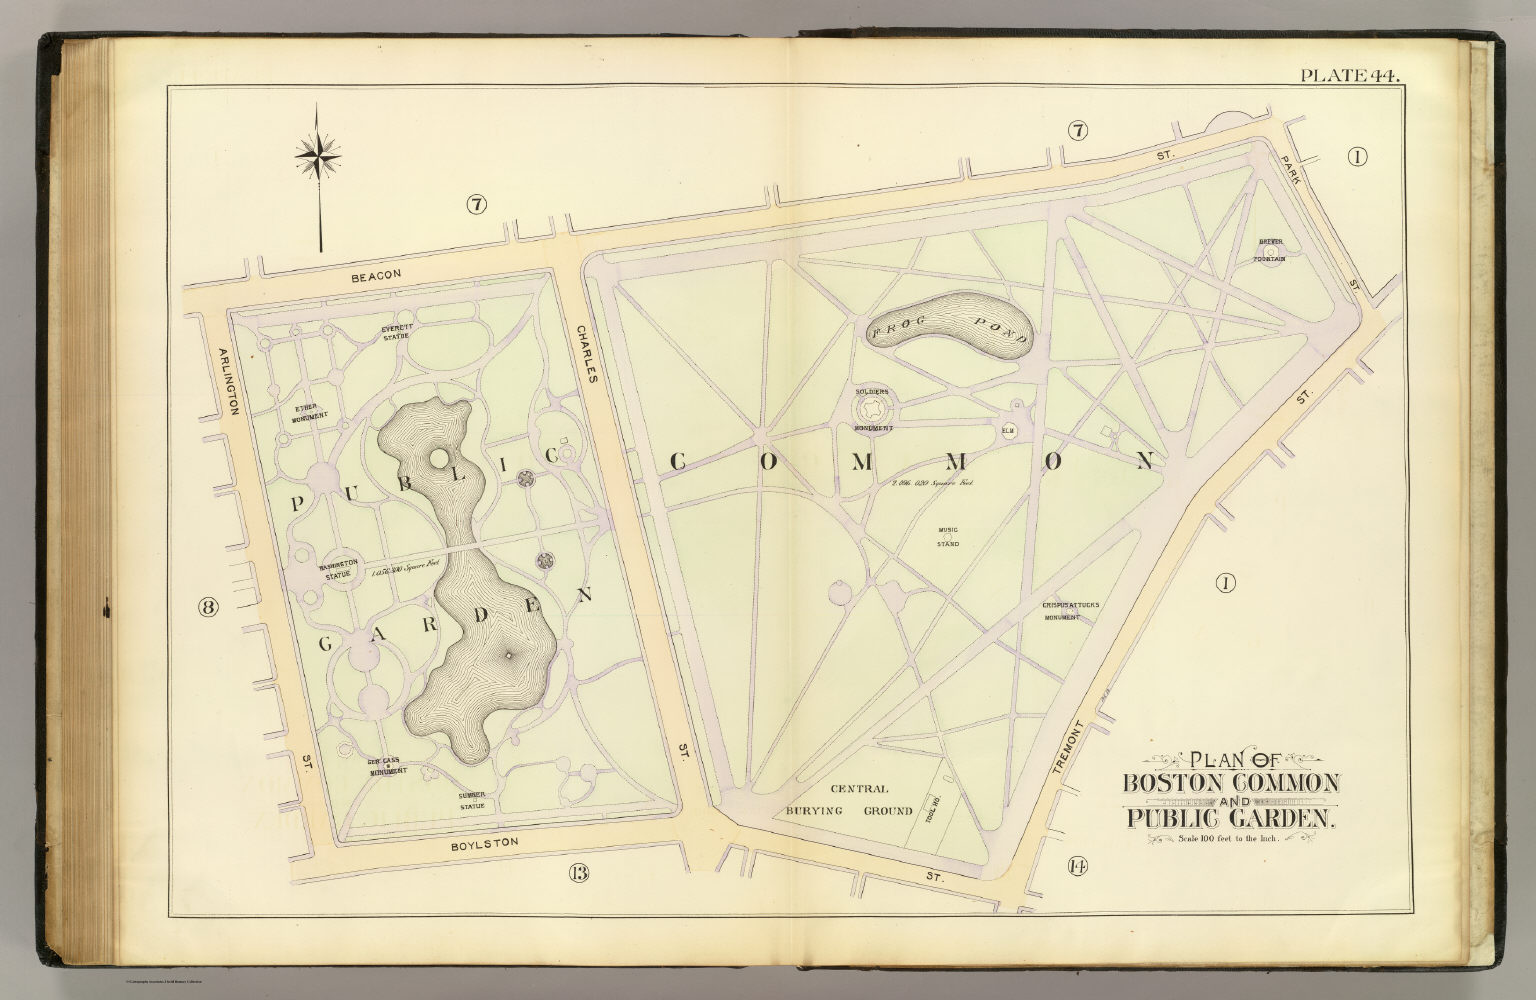 44. Boston Common, Public Garden. - David Rumsey Historical Map Collection